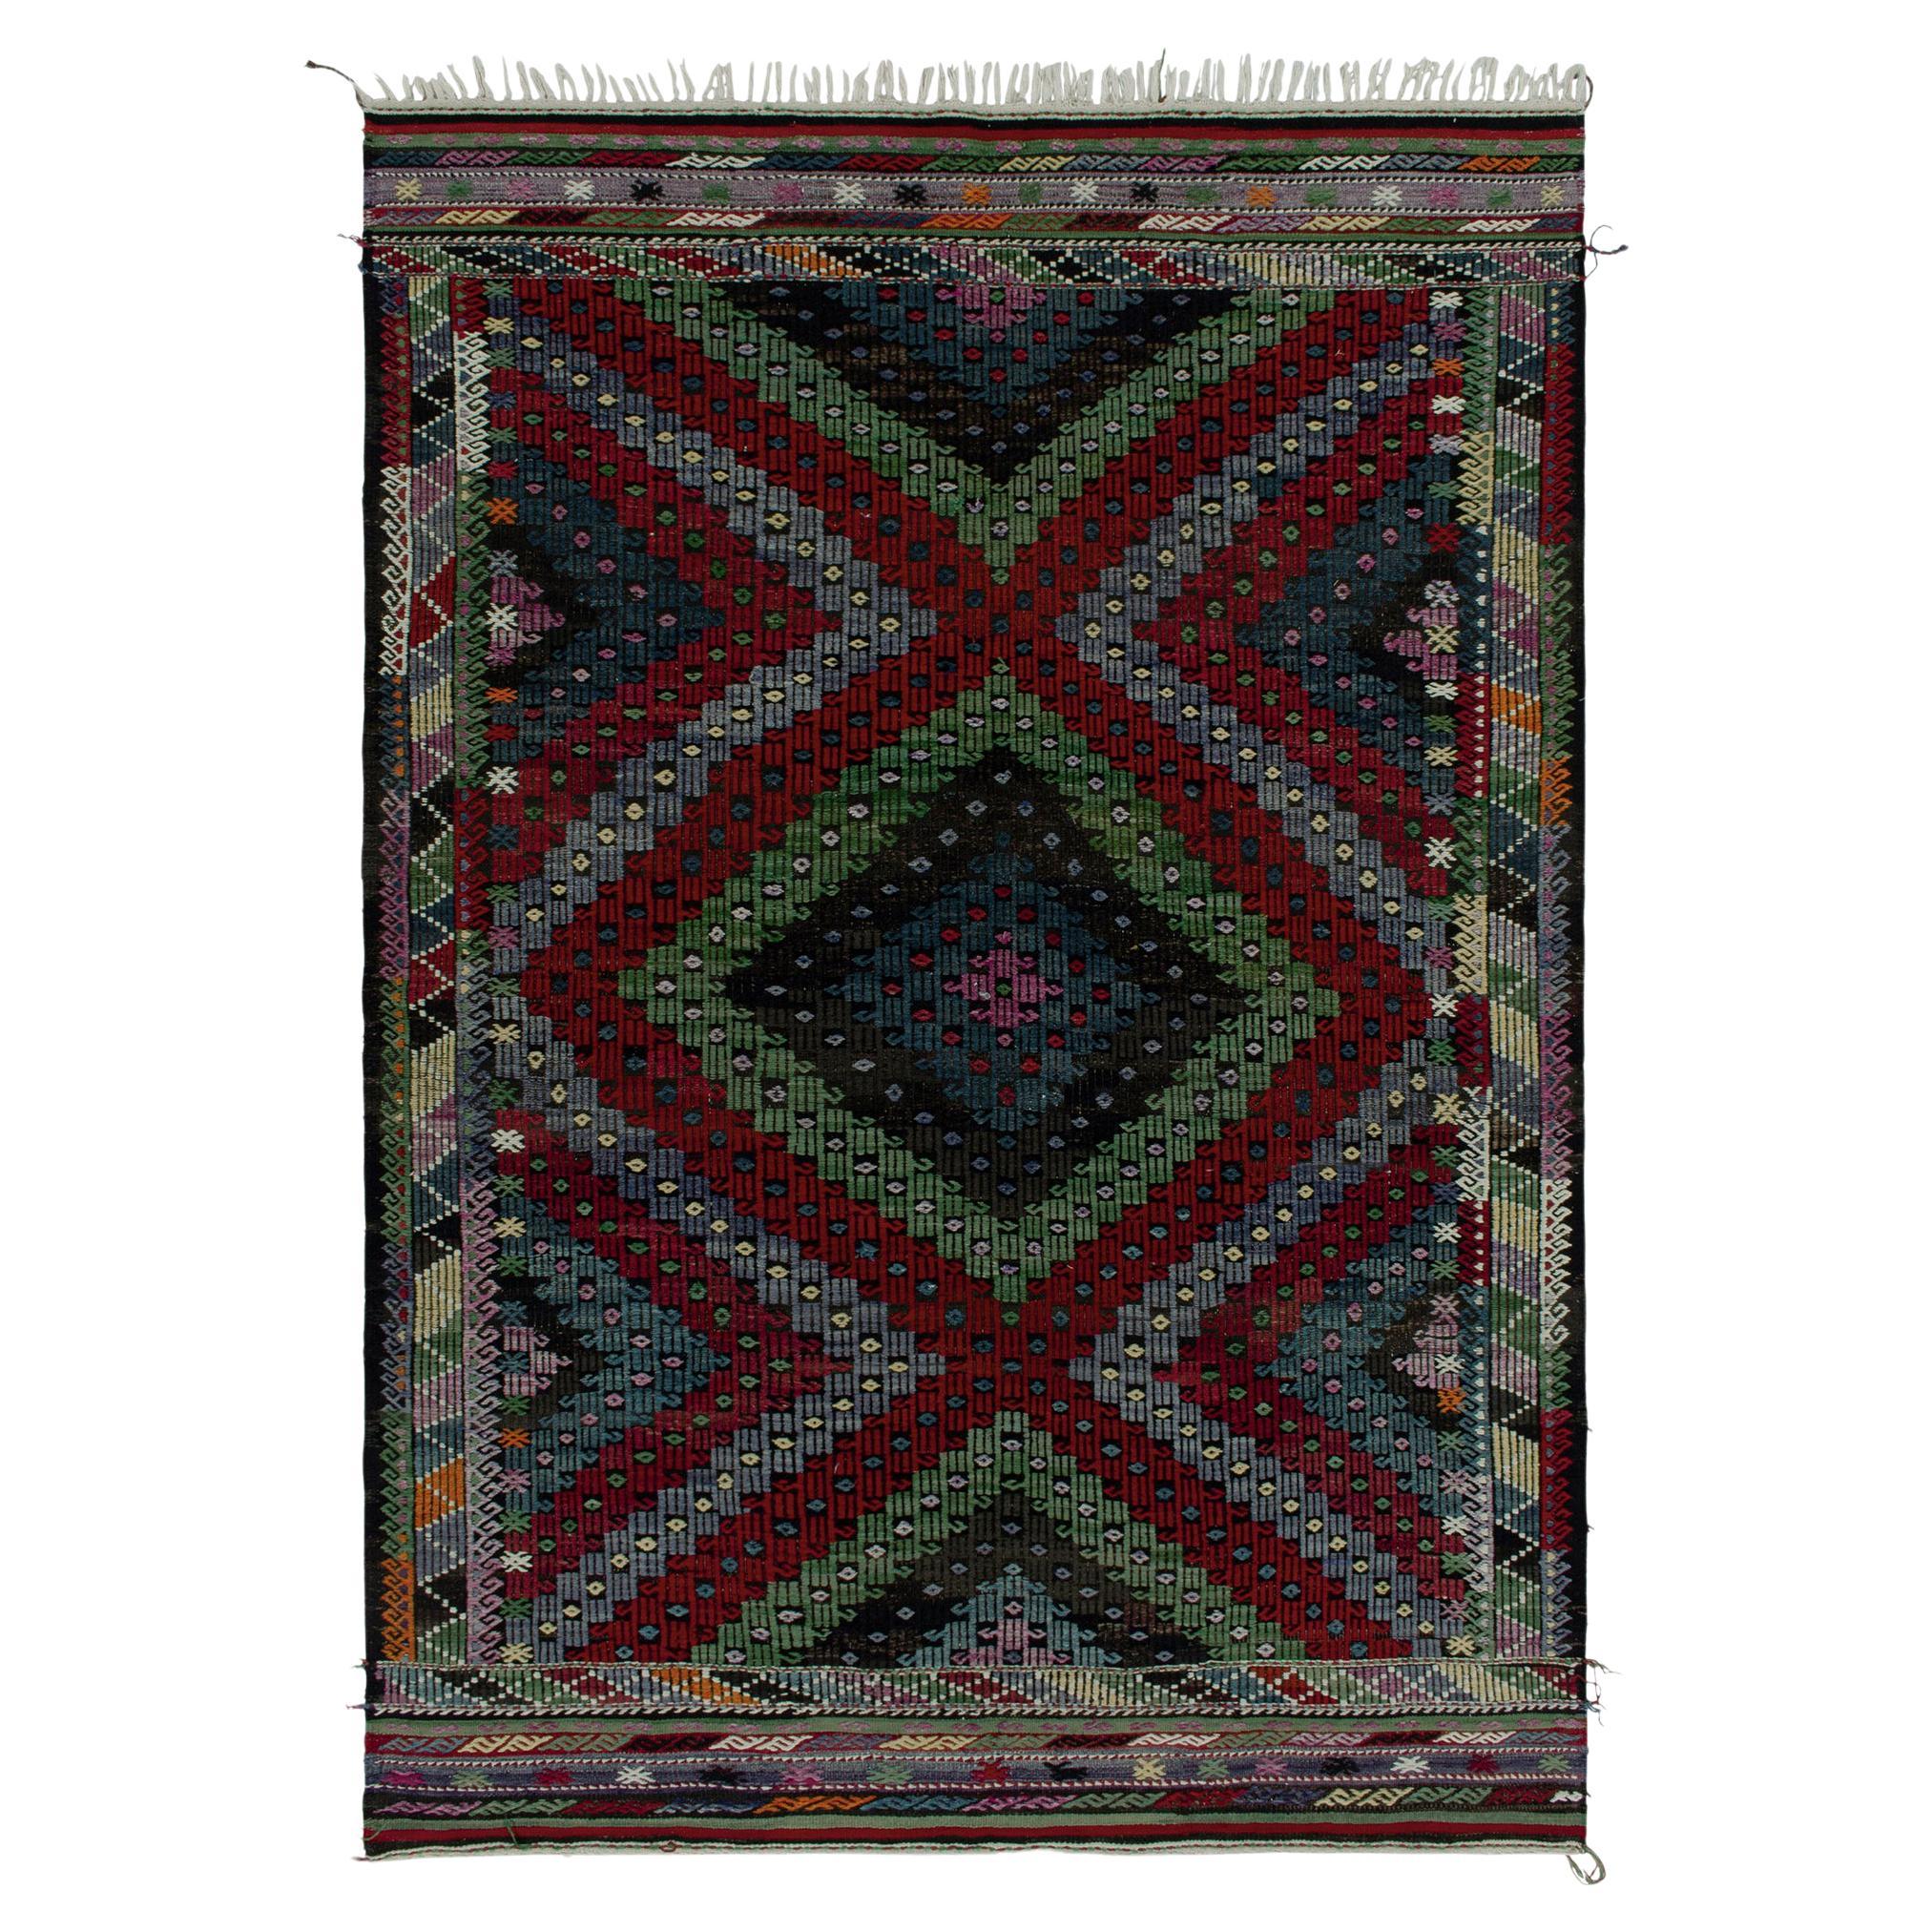 Vintage Tribal Kilim in Multicolor Embroidered Geometric Patterns by Rug & kilim